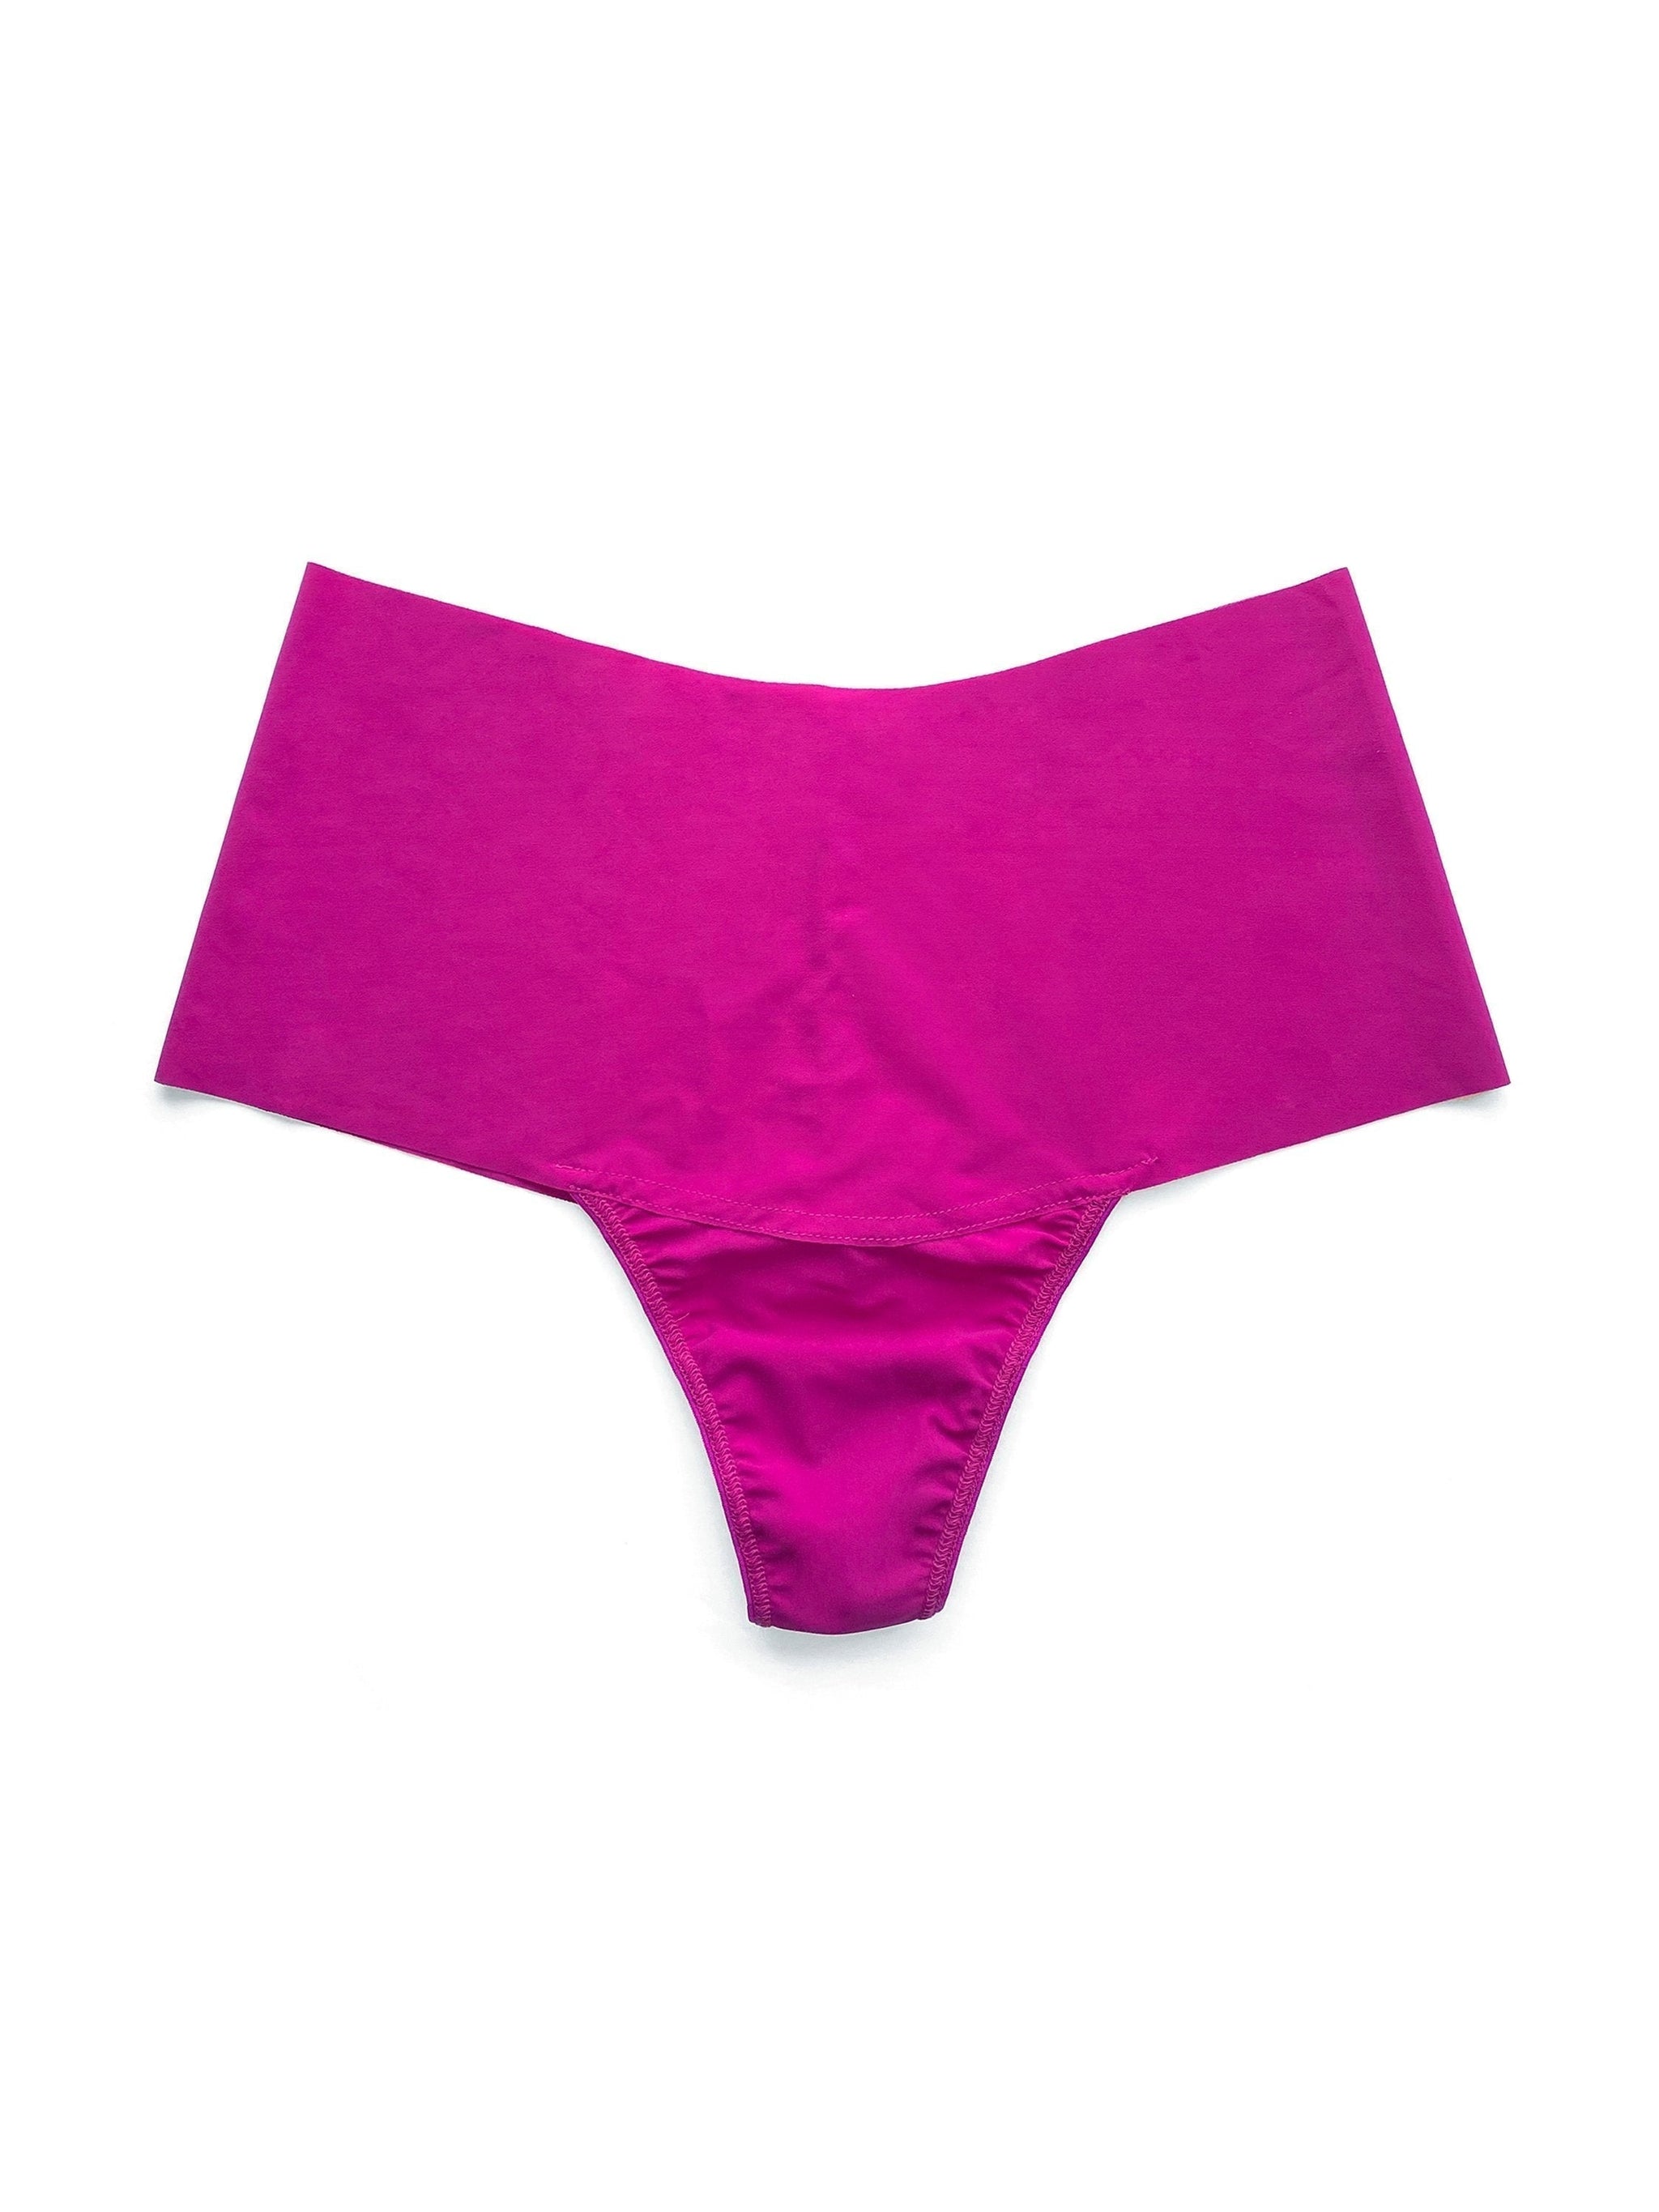 Victoria's Secret Pink NWT Victoria's Secret PINK Seamless Thong Stretchy  Panty Hot Pink Fuchsia Medium